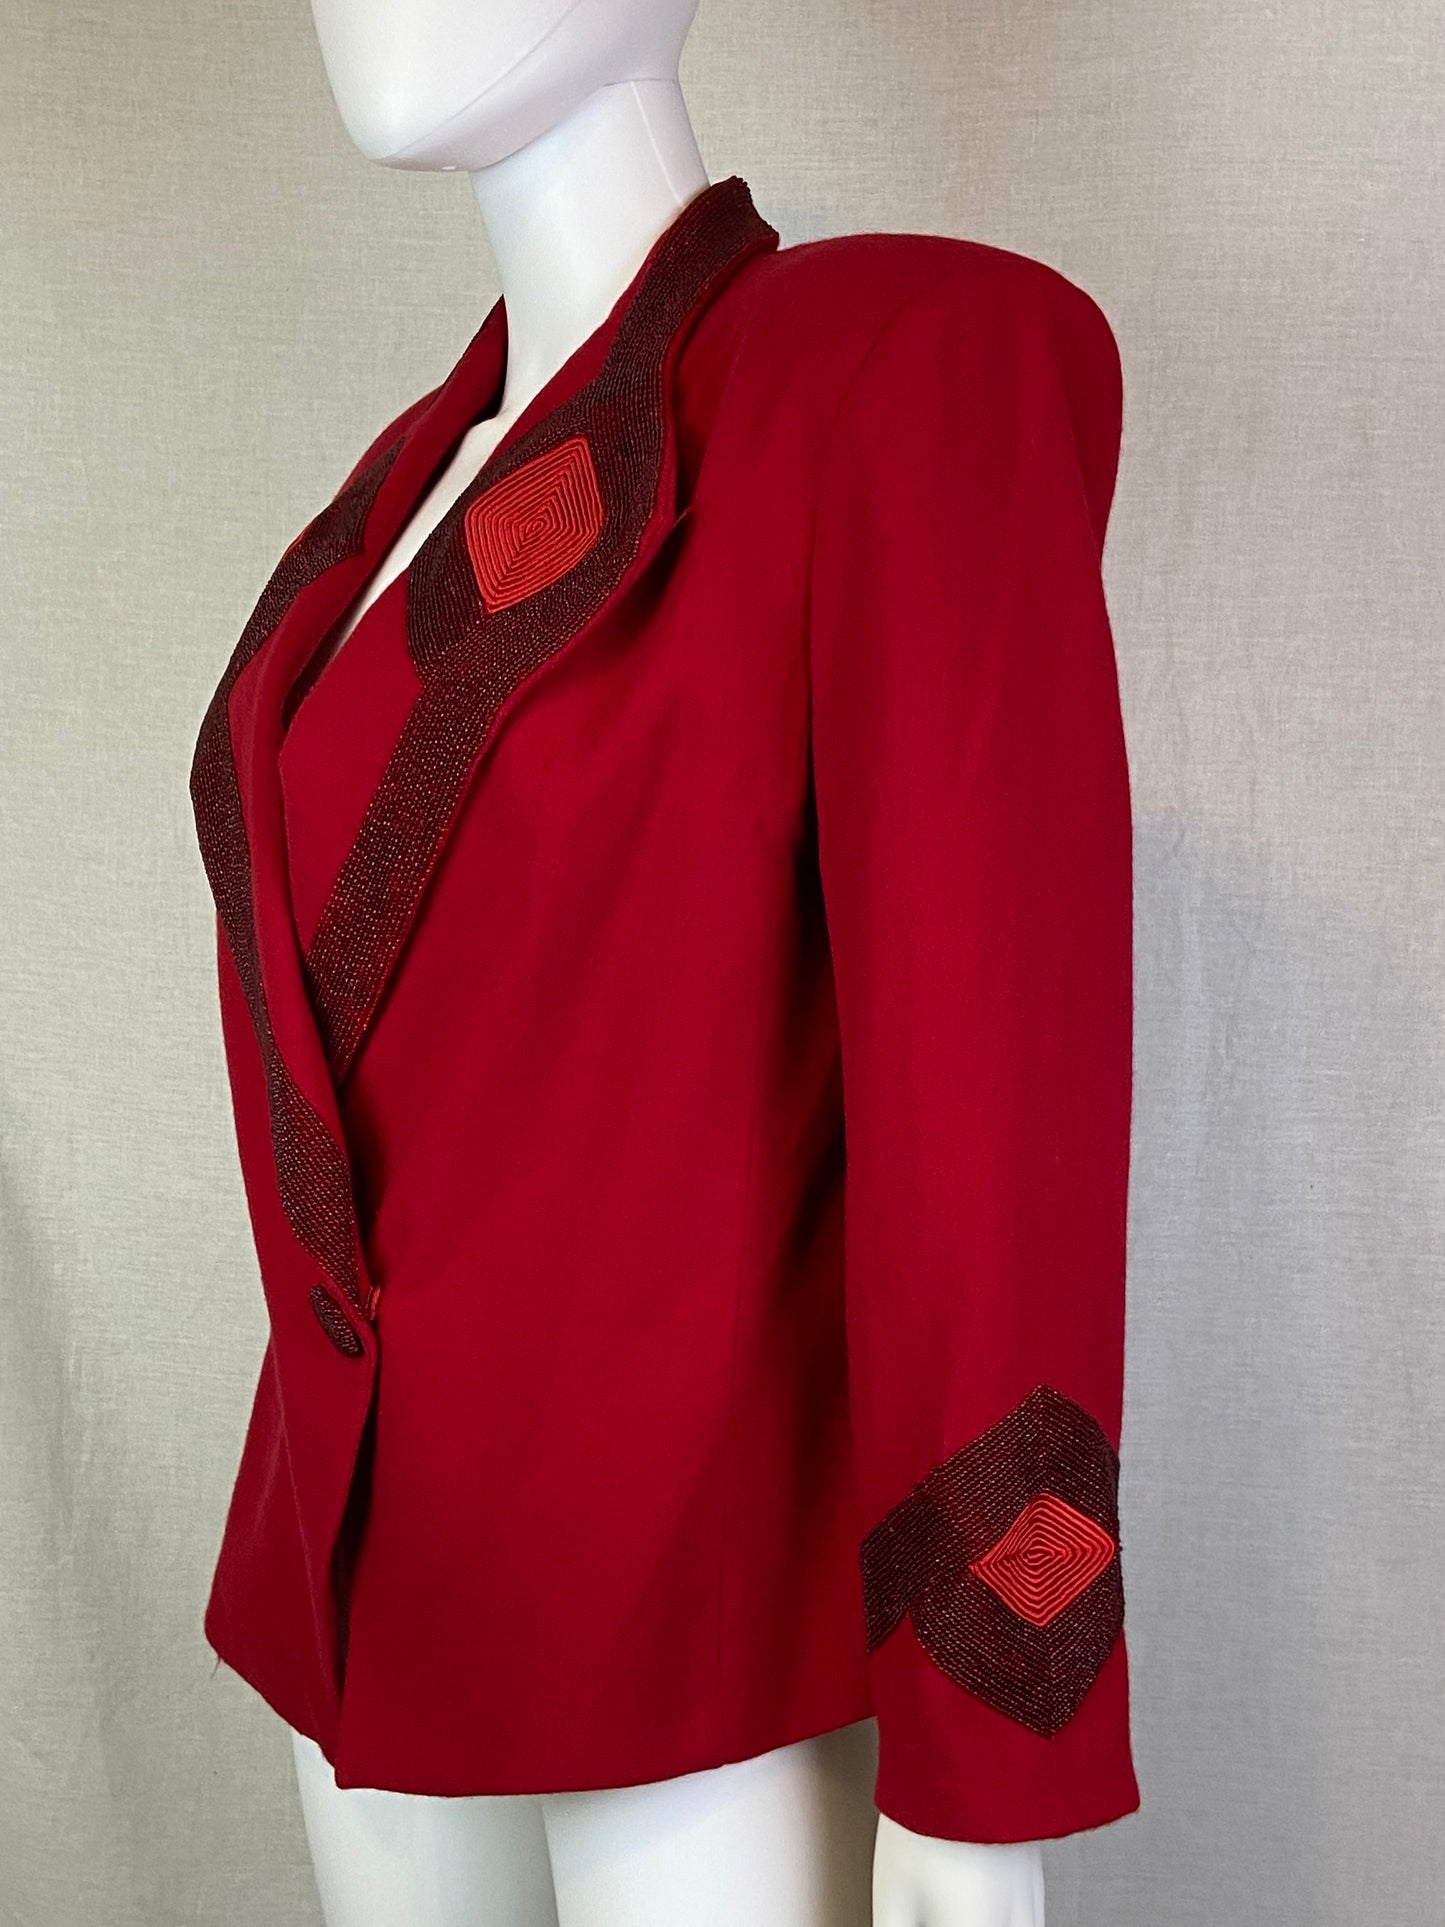 Vintage Nolan Miller Red Wool Beaded Blazer Jacket